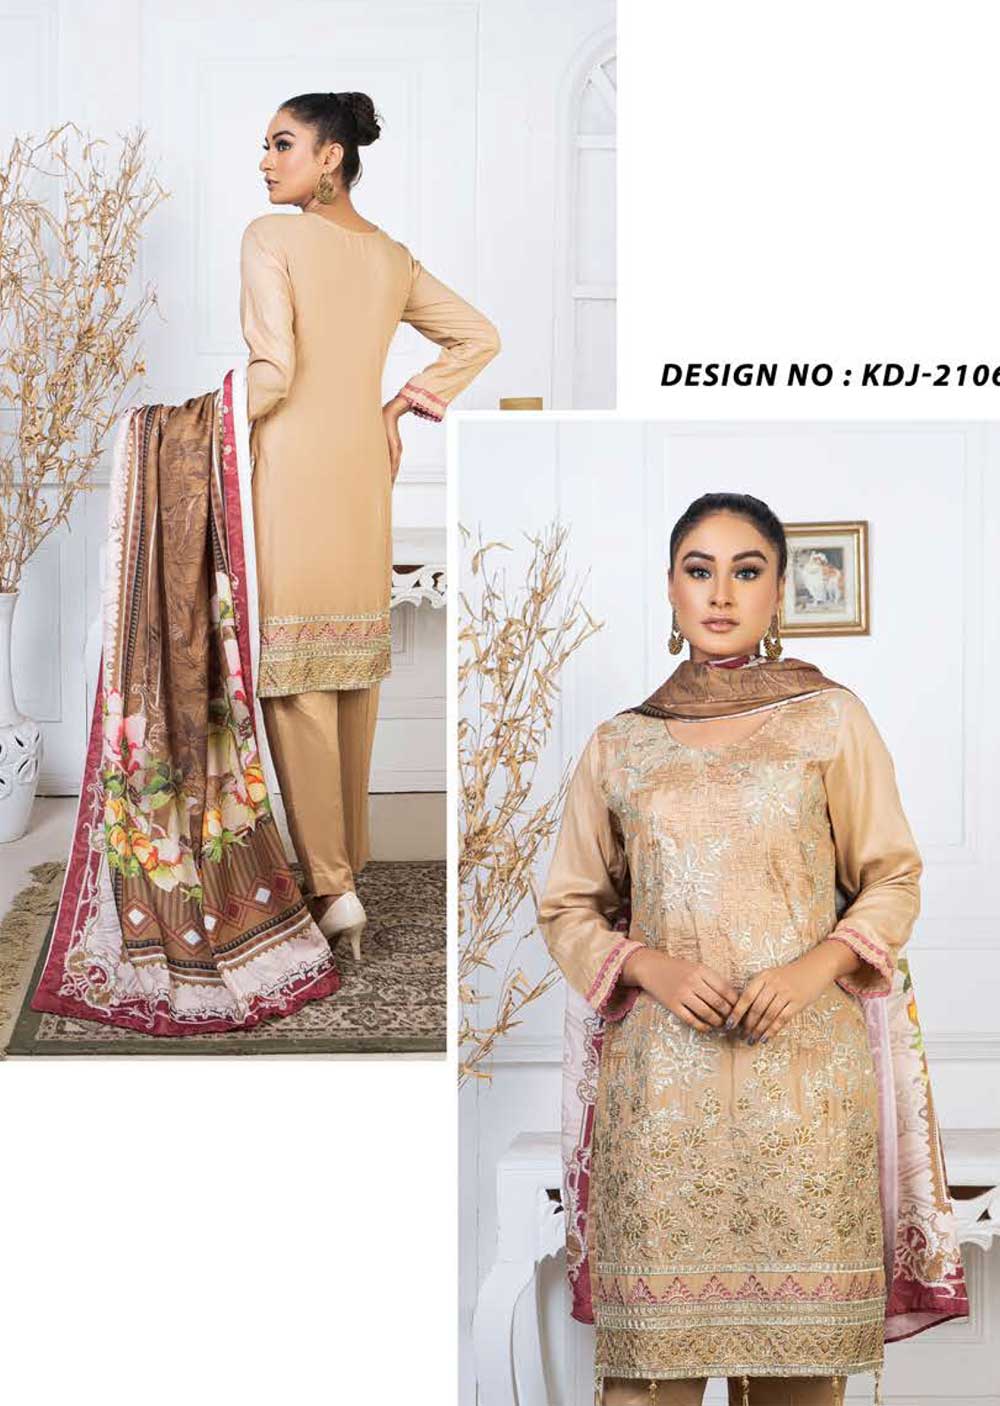 KDJ-2106 - Readymade - Khadijah Vol 21 Designer Suit by Nasir's - Memsaab Online